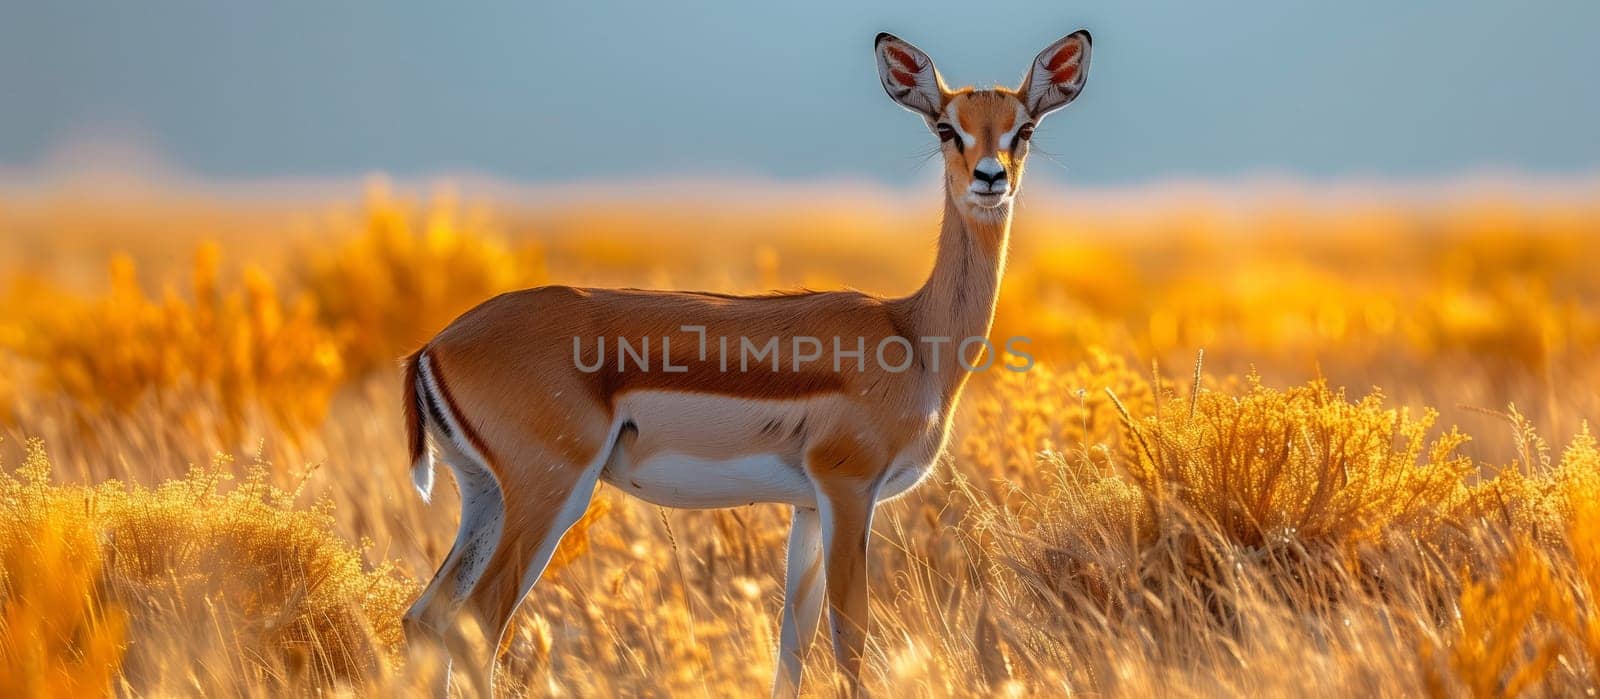 Deer in grassy Ecoregion field, a Terrestrial animal in Natural landscape by richwolf